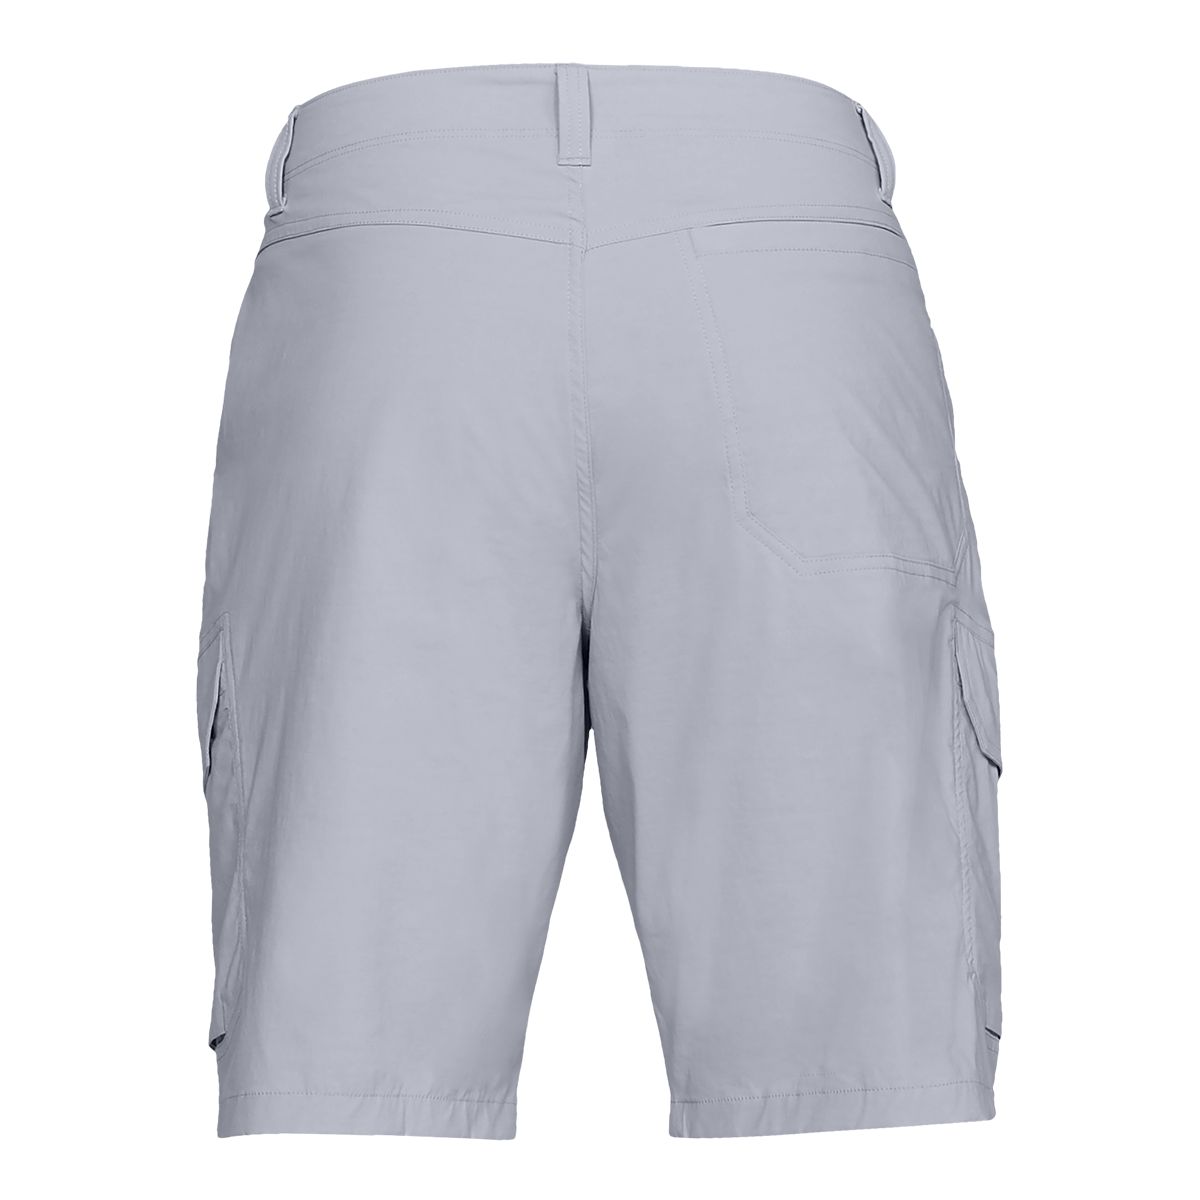 UNDERARMO Fish Cargo Shorts - Men's